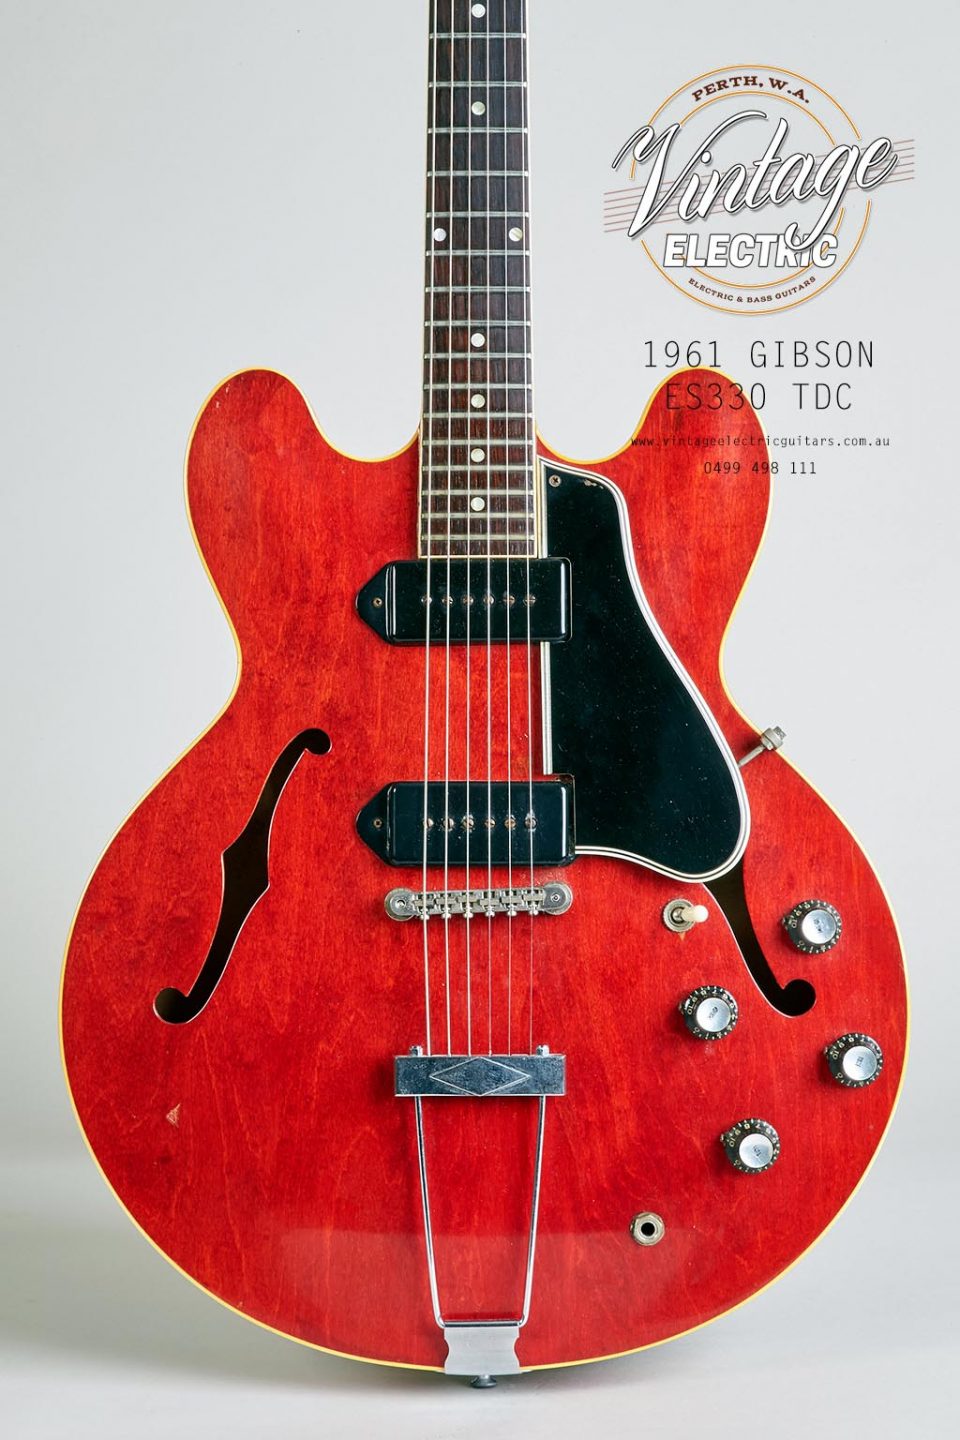 1961 Gibson ES 330 TDC Body